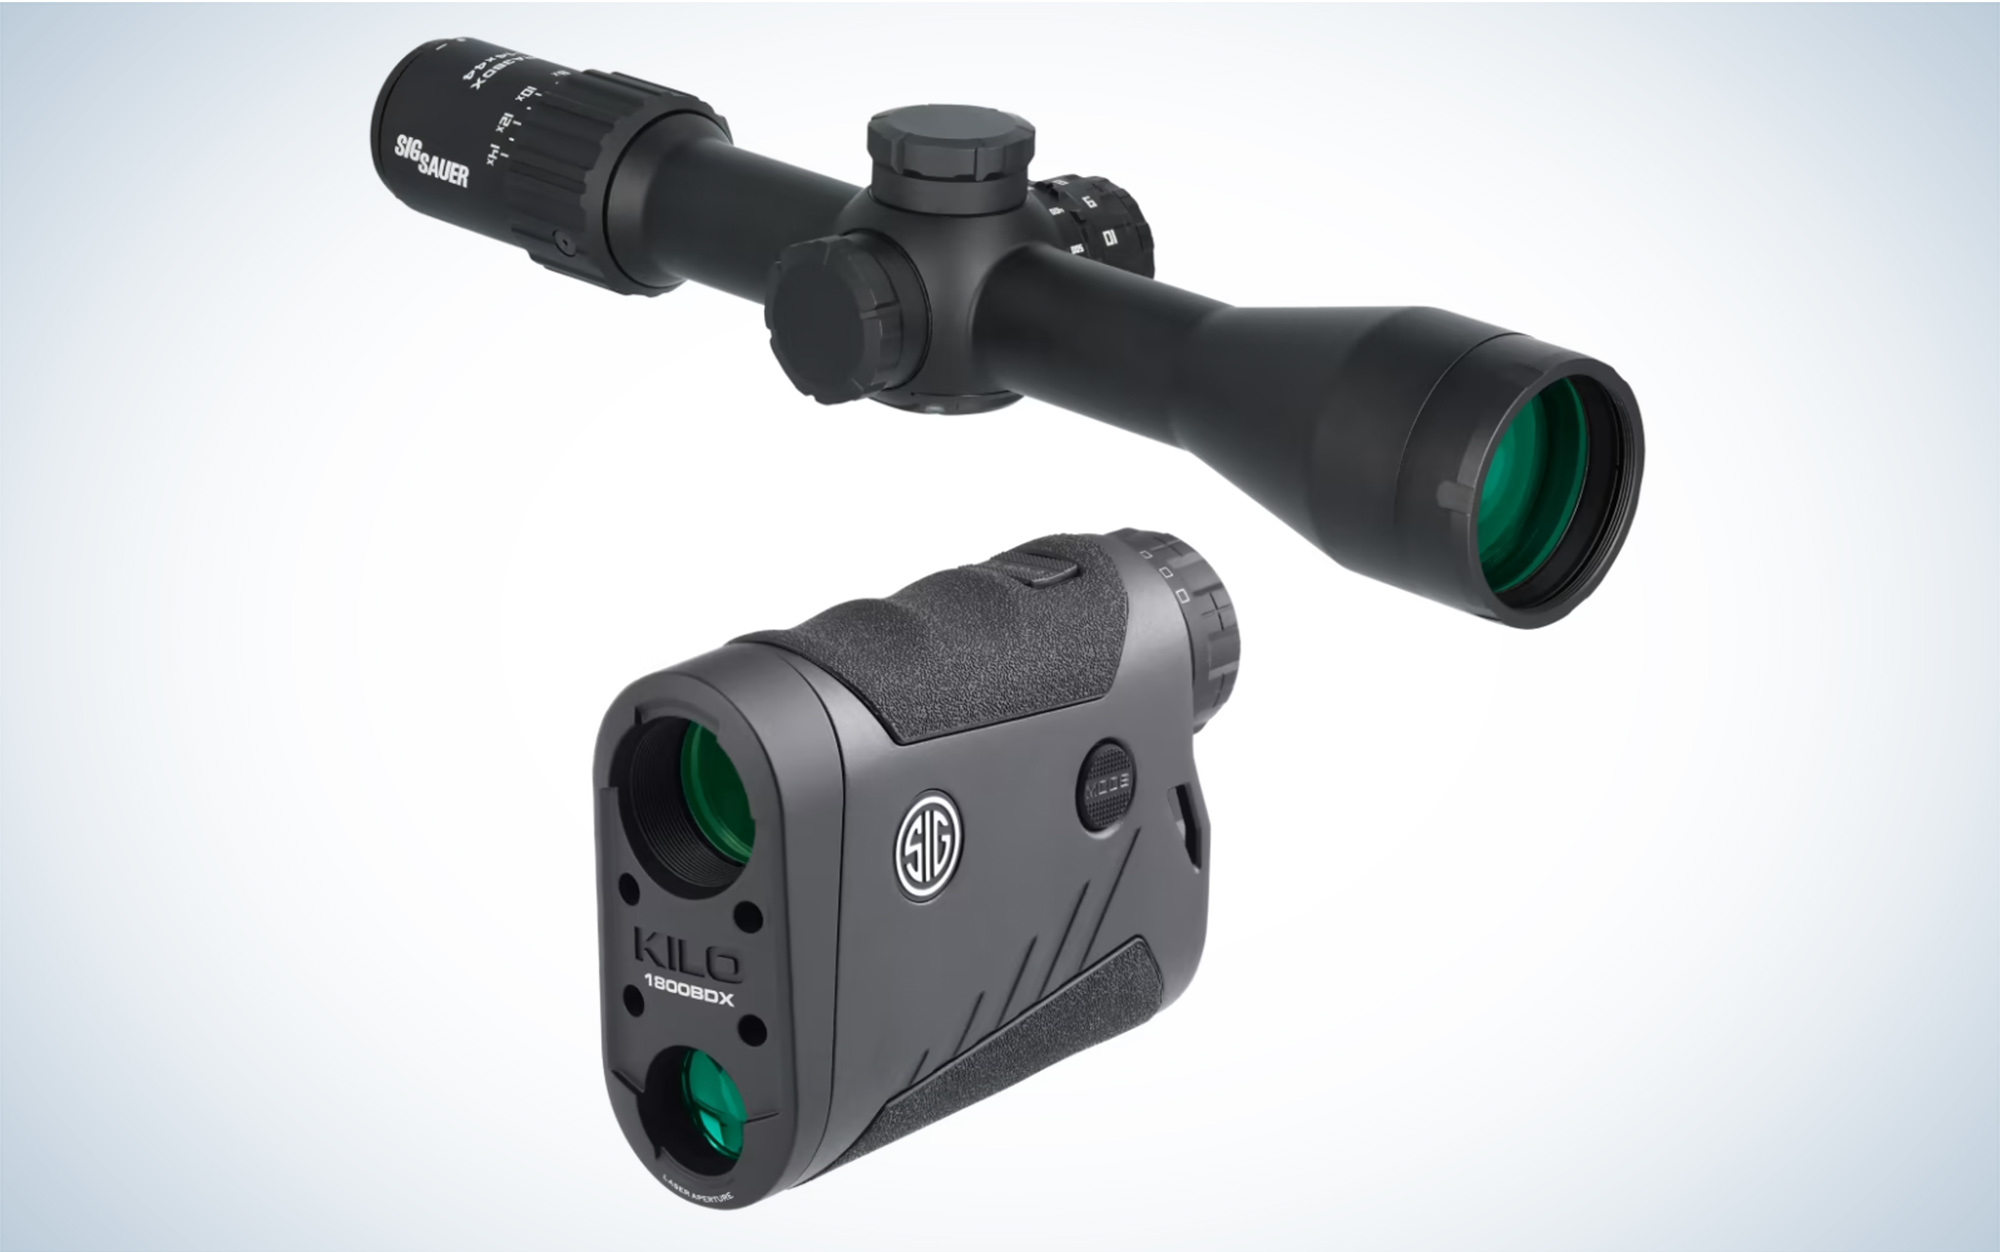 The Sig Sauer SIERRA3BDX 4.5-14X42mm is the best precision scope.